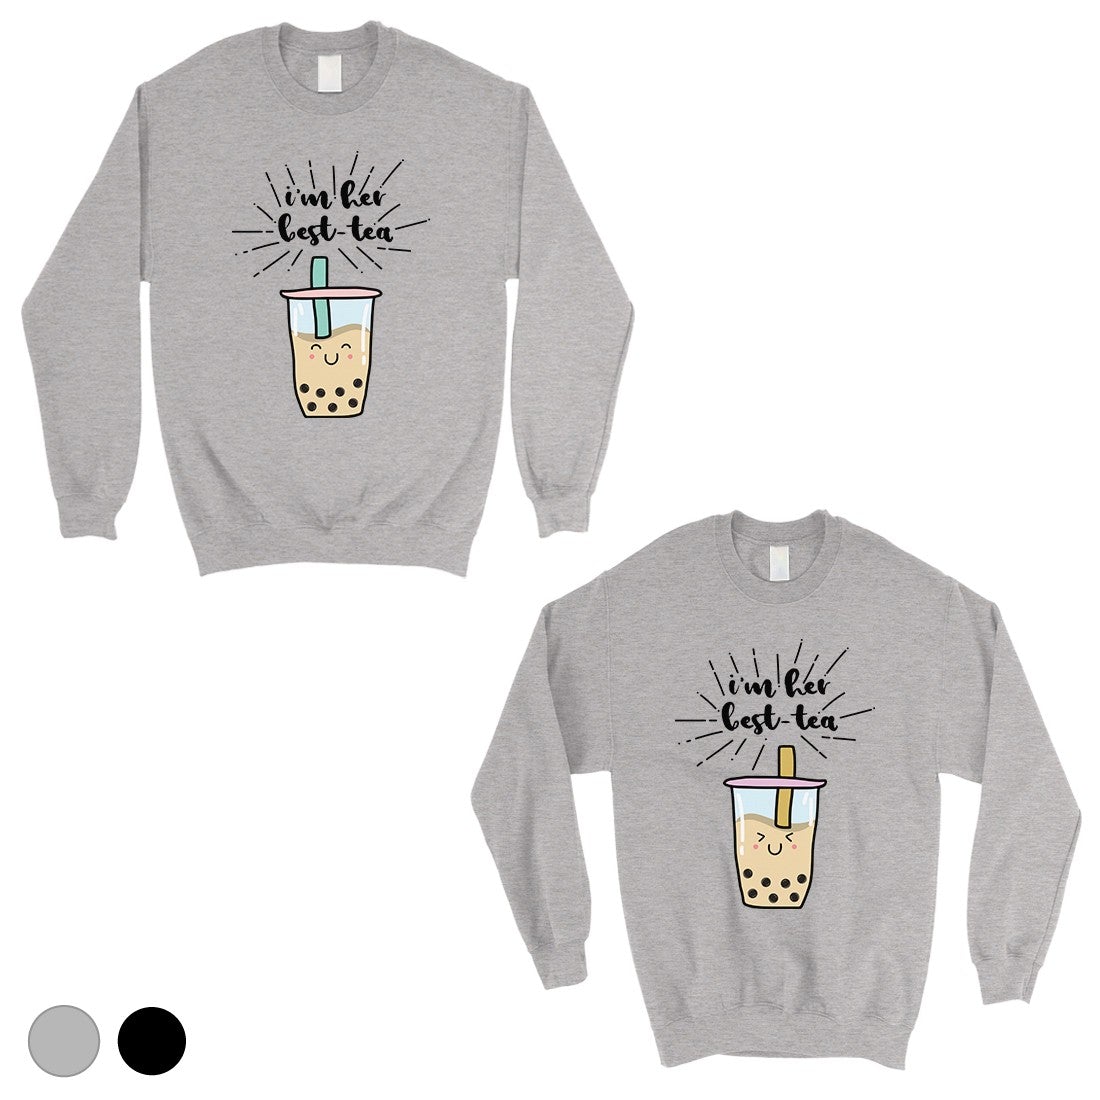 Boba Milk Best-Tea Cute BFF Matching Sweatshirts Birthday Gift Gray